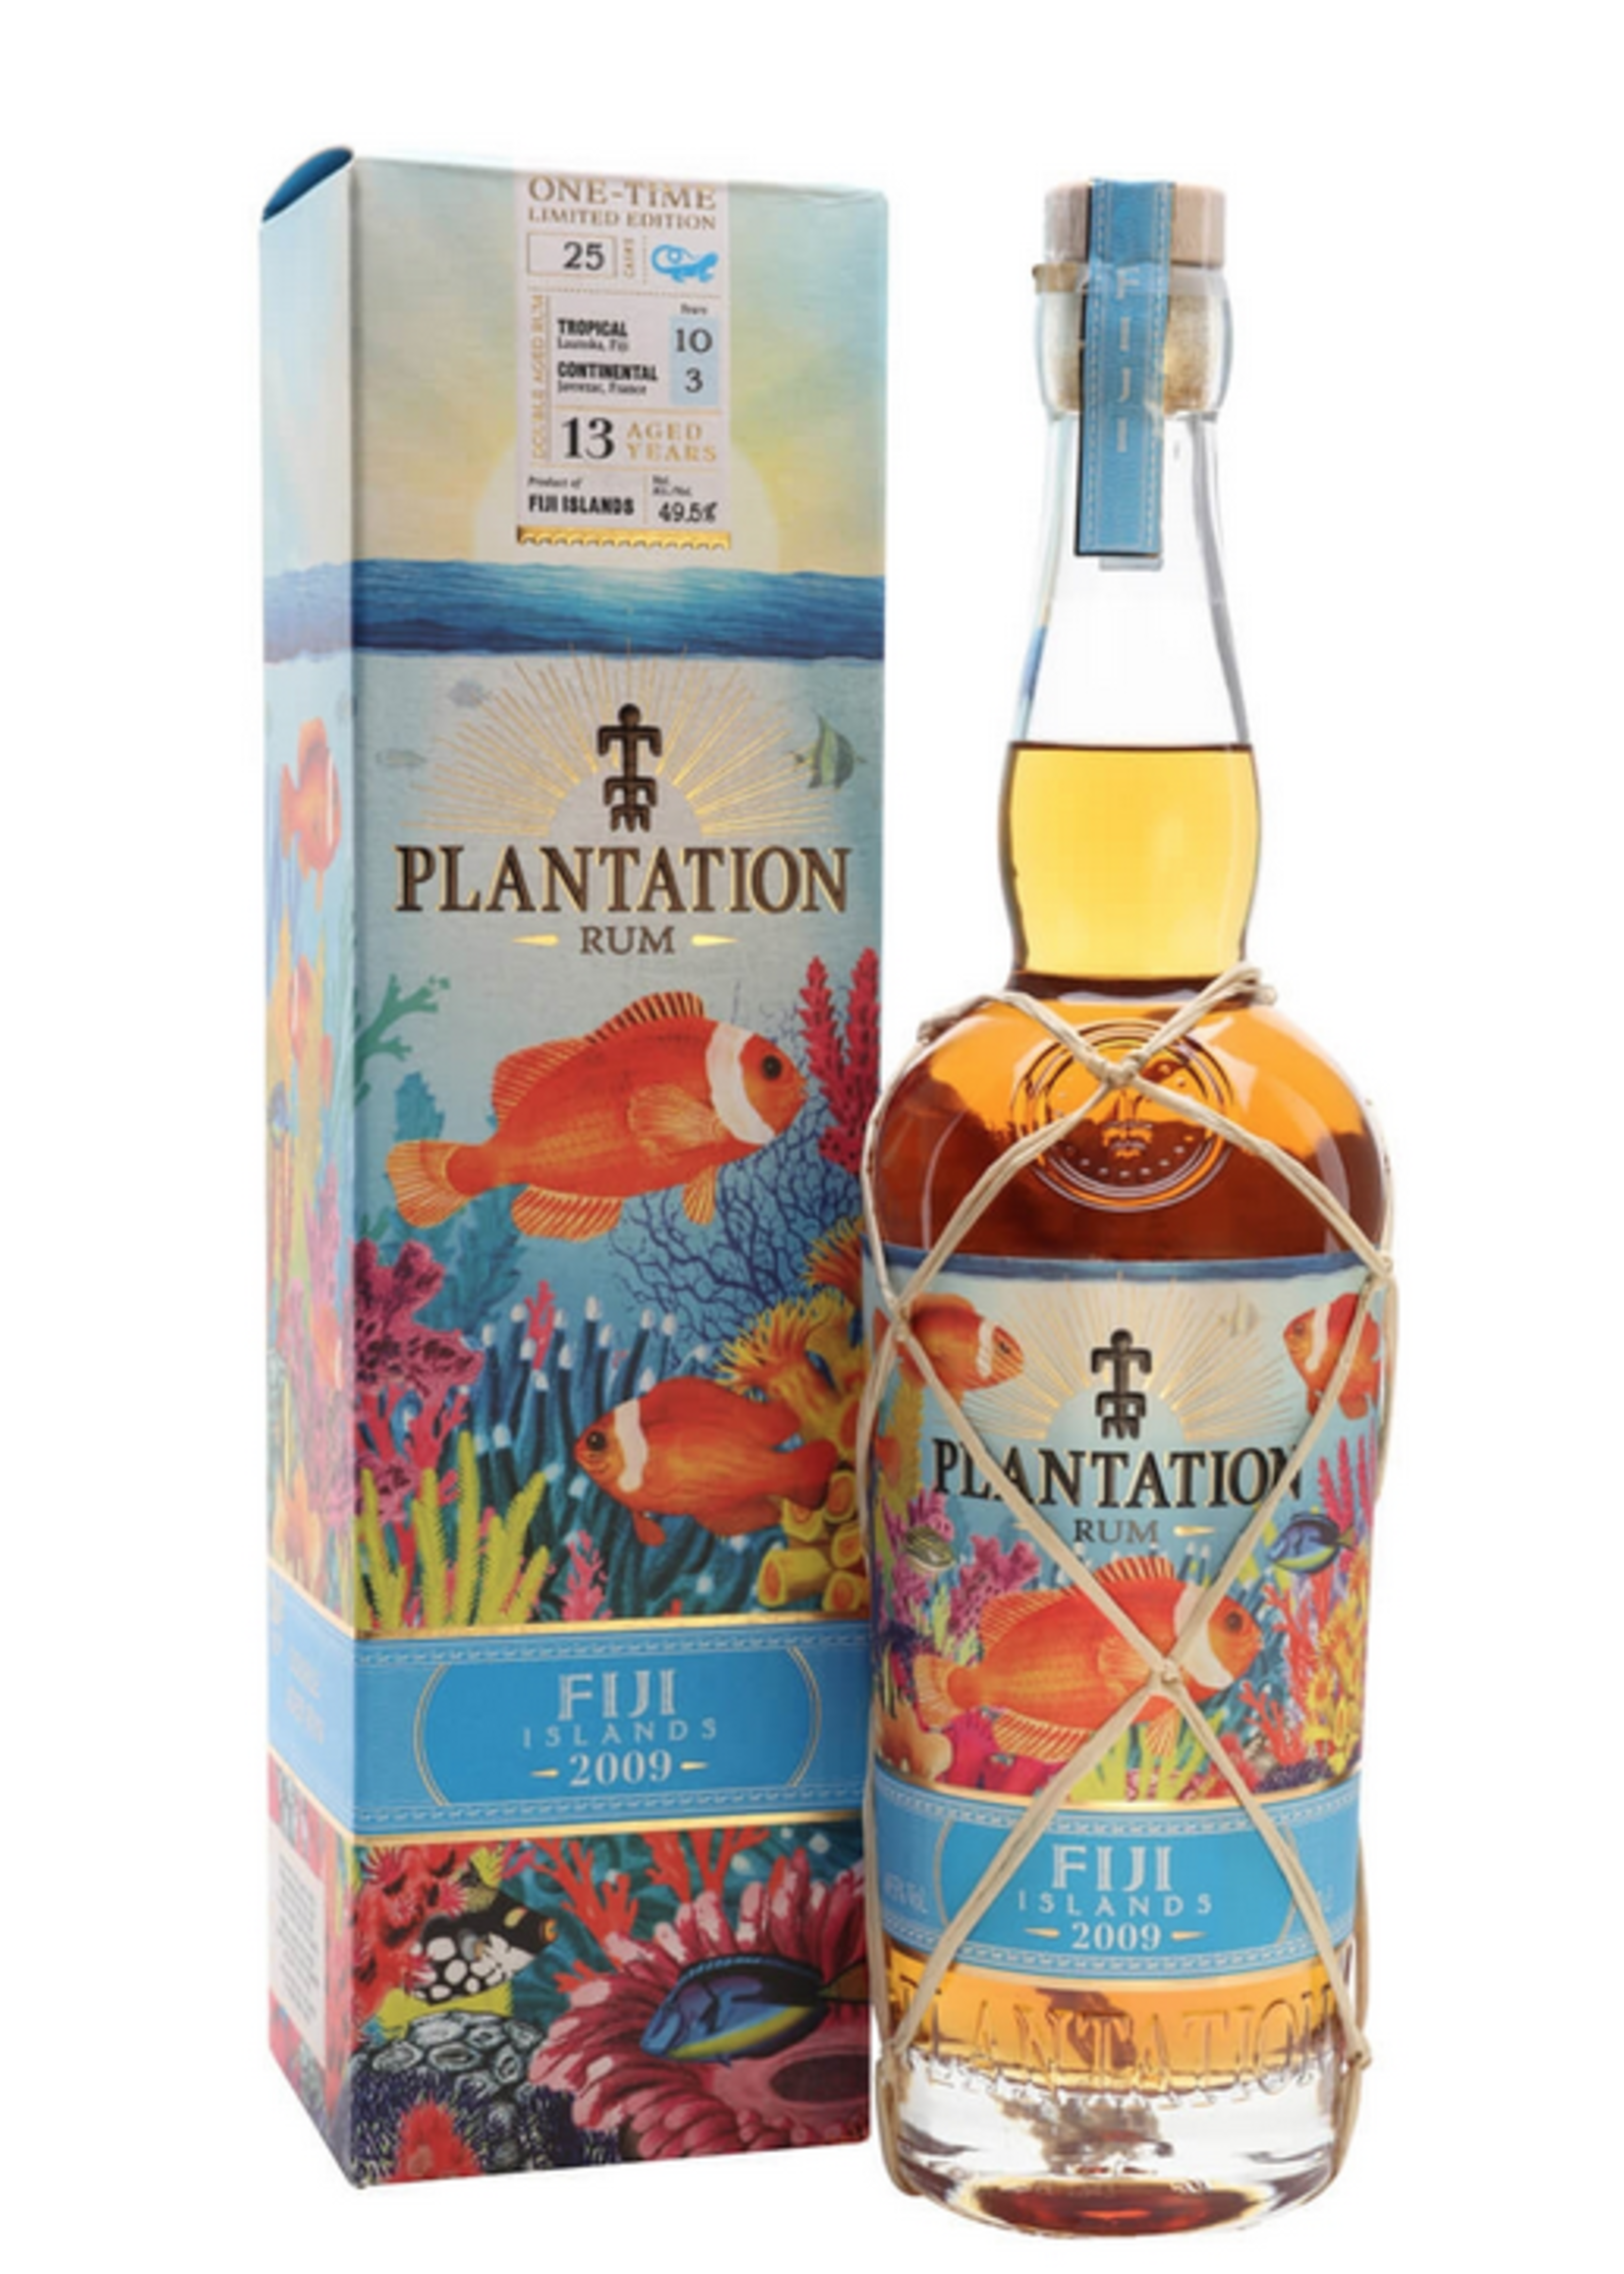 Plantation Rum - Plantation - Fiji Islands 2009